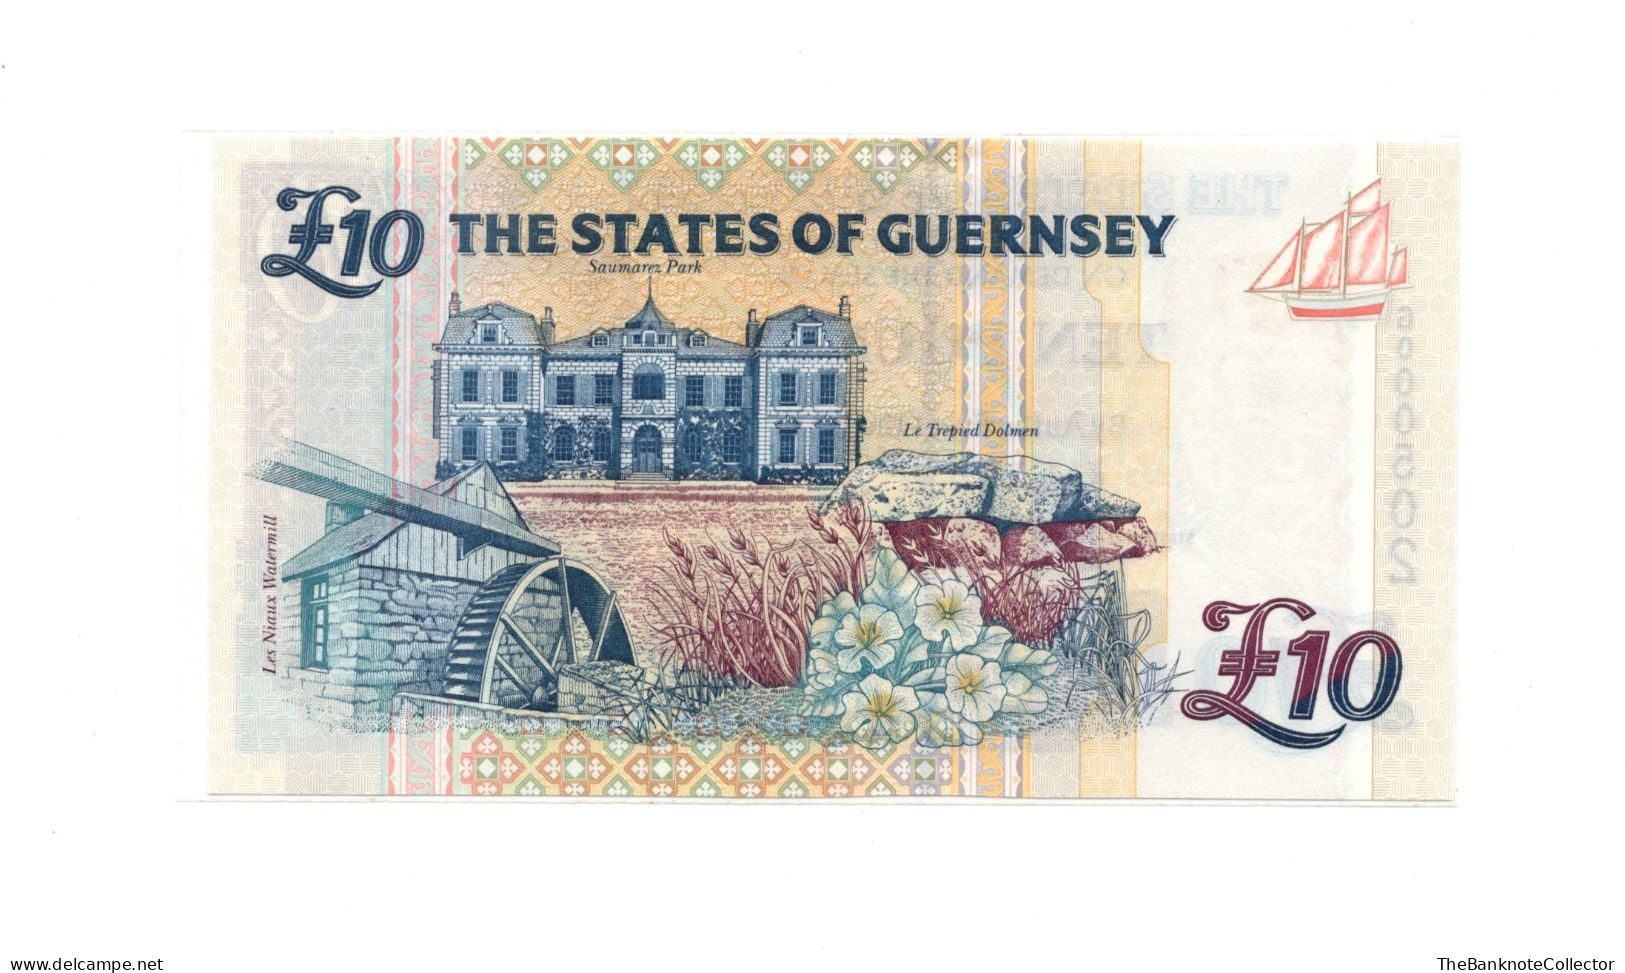 Guernsey 10 Pounds ND1996 QEII P-57 UNC - Guernsey